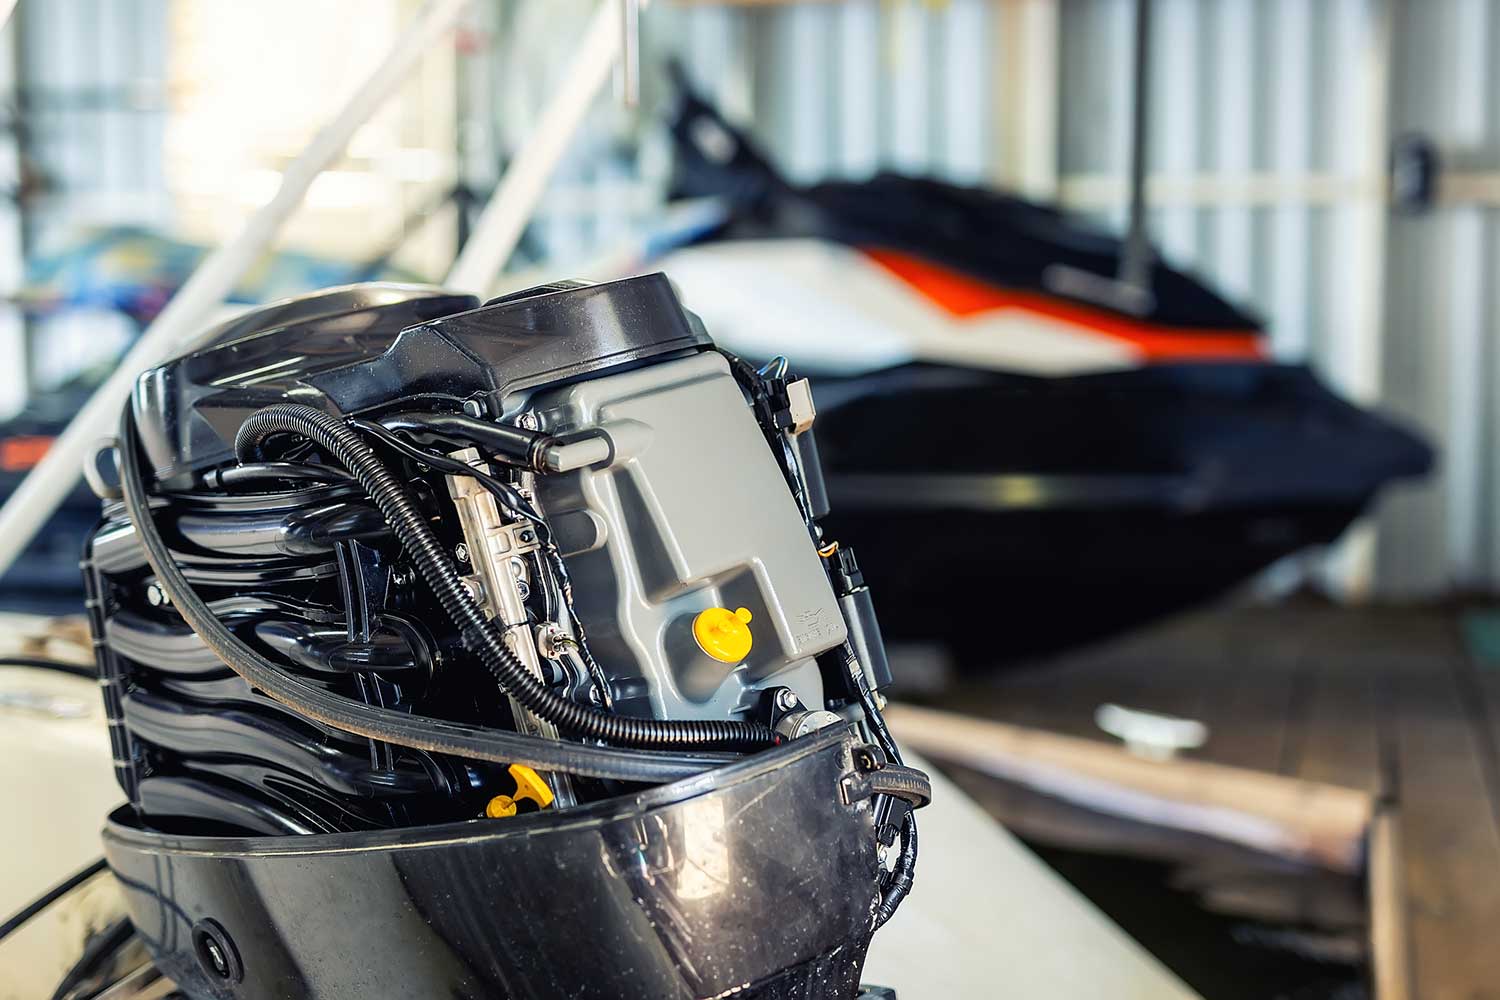 Repairing inflatable motorboat engine at boat garage